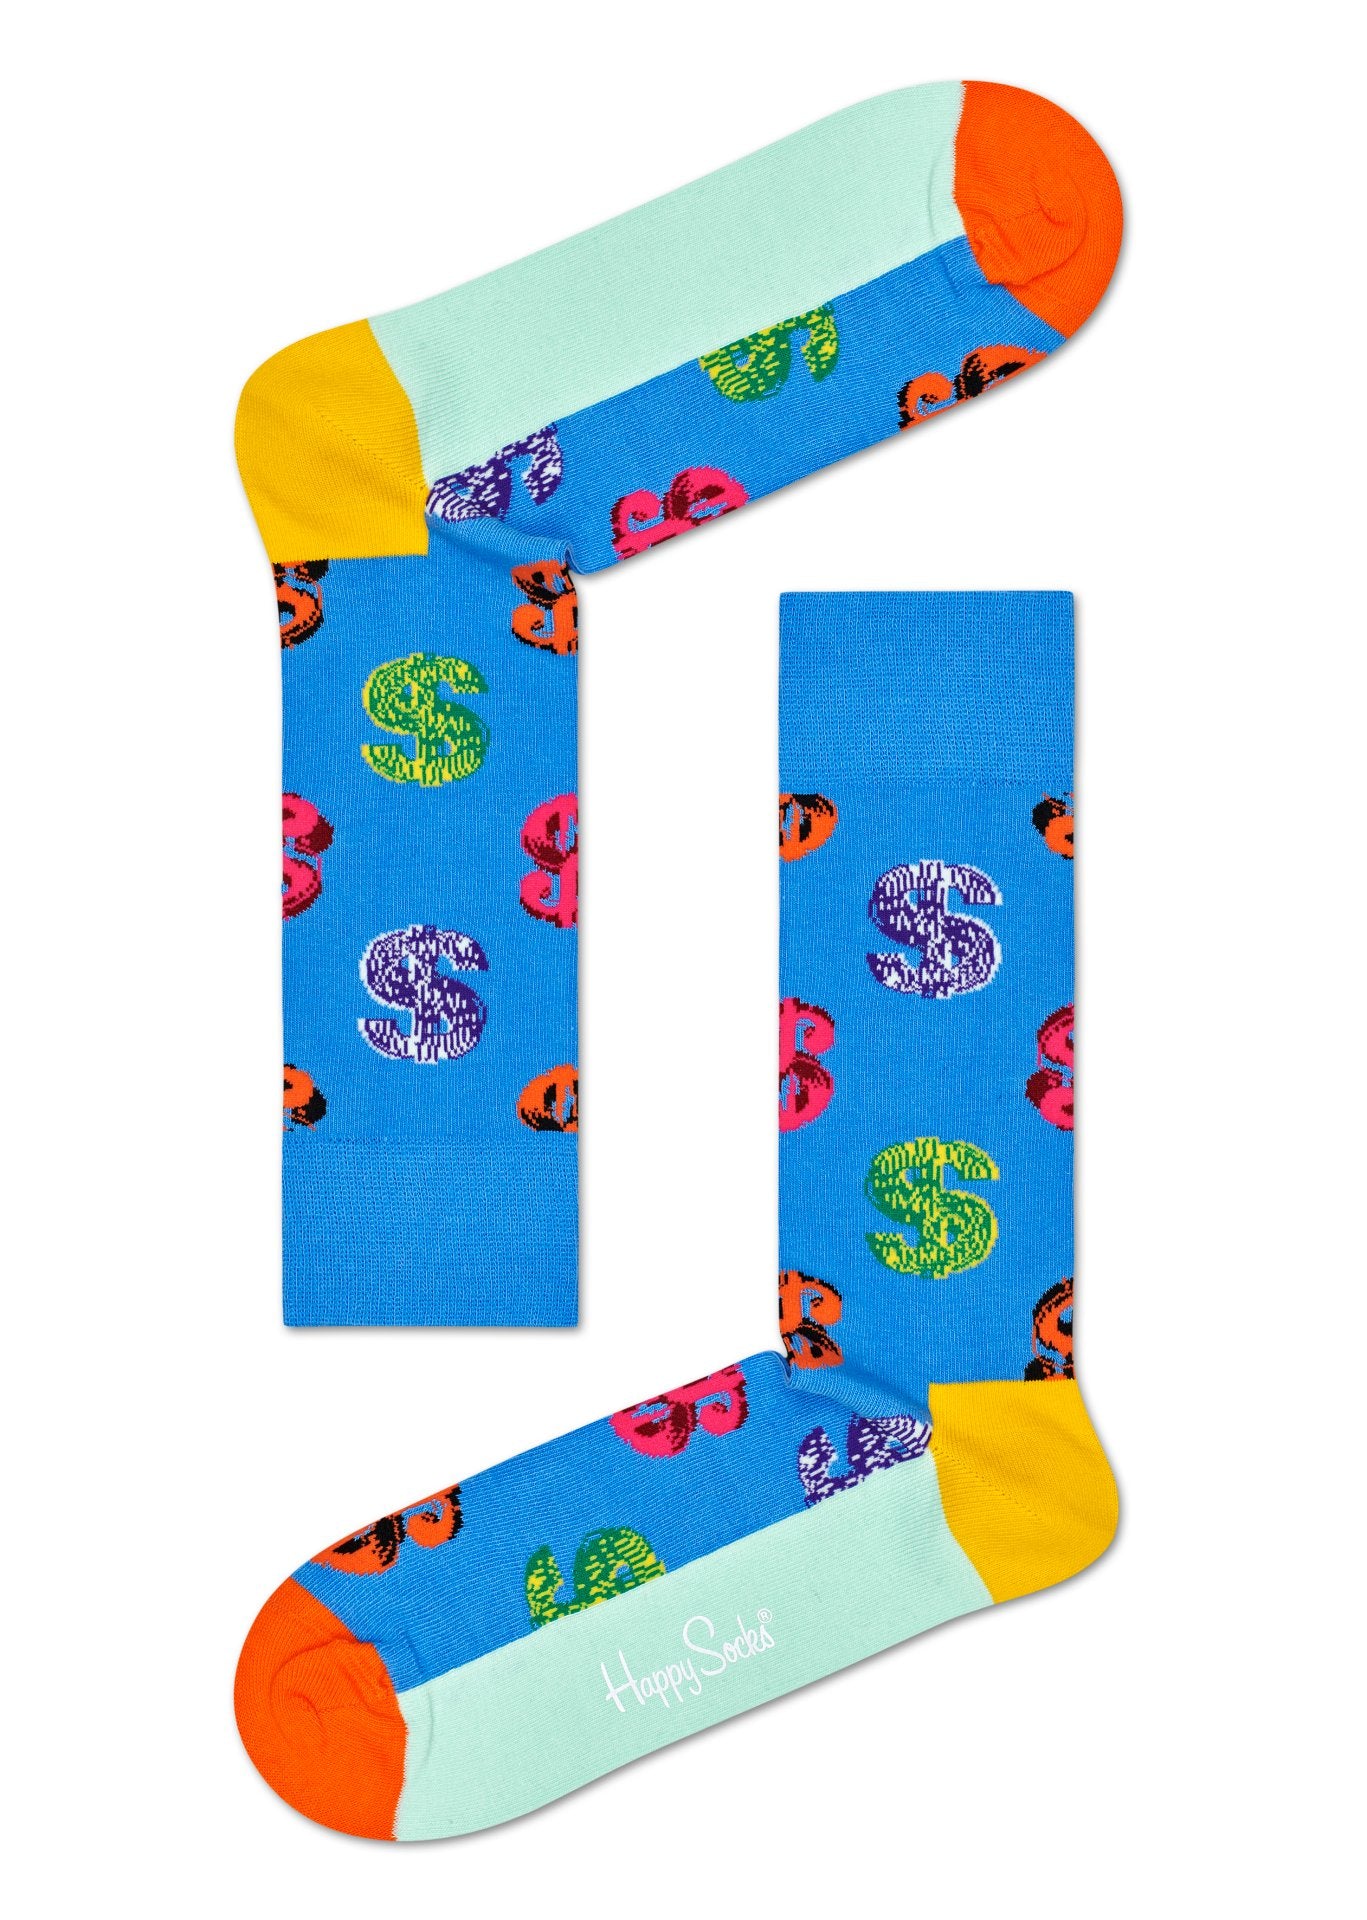 Modré ponožky so znakom dolára z kolekcie Happy Socks x Andy Warhol, vzor Dollar